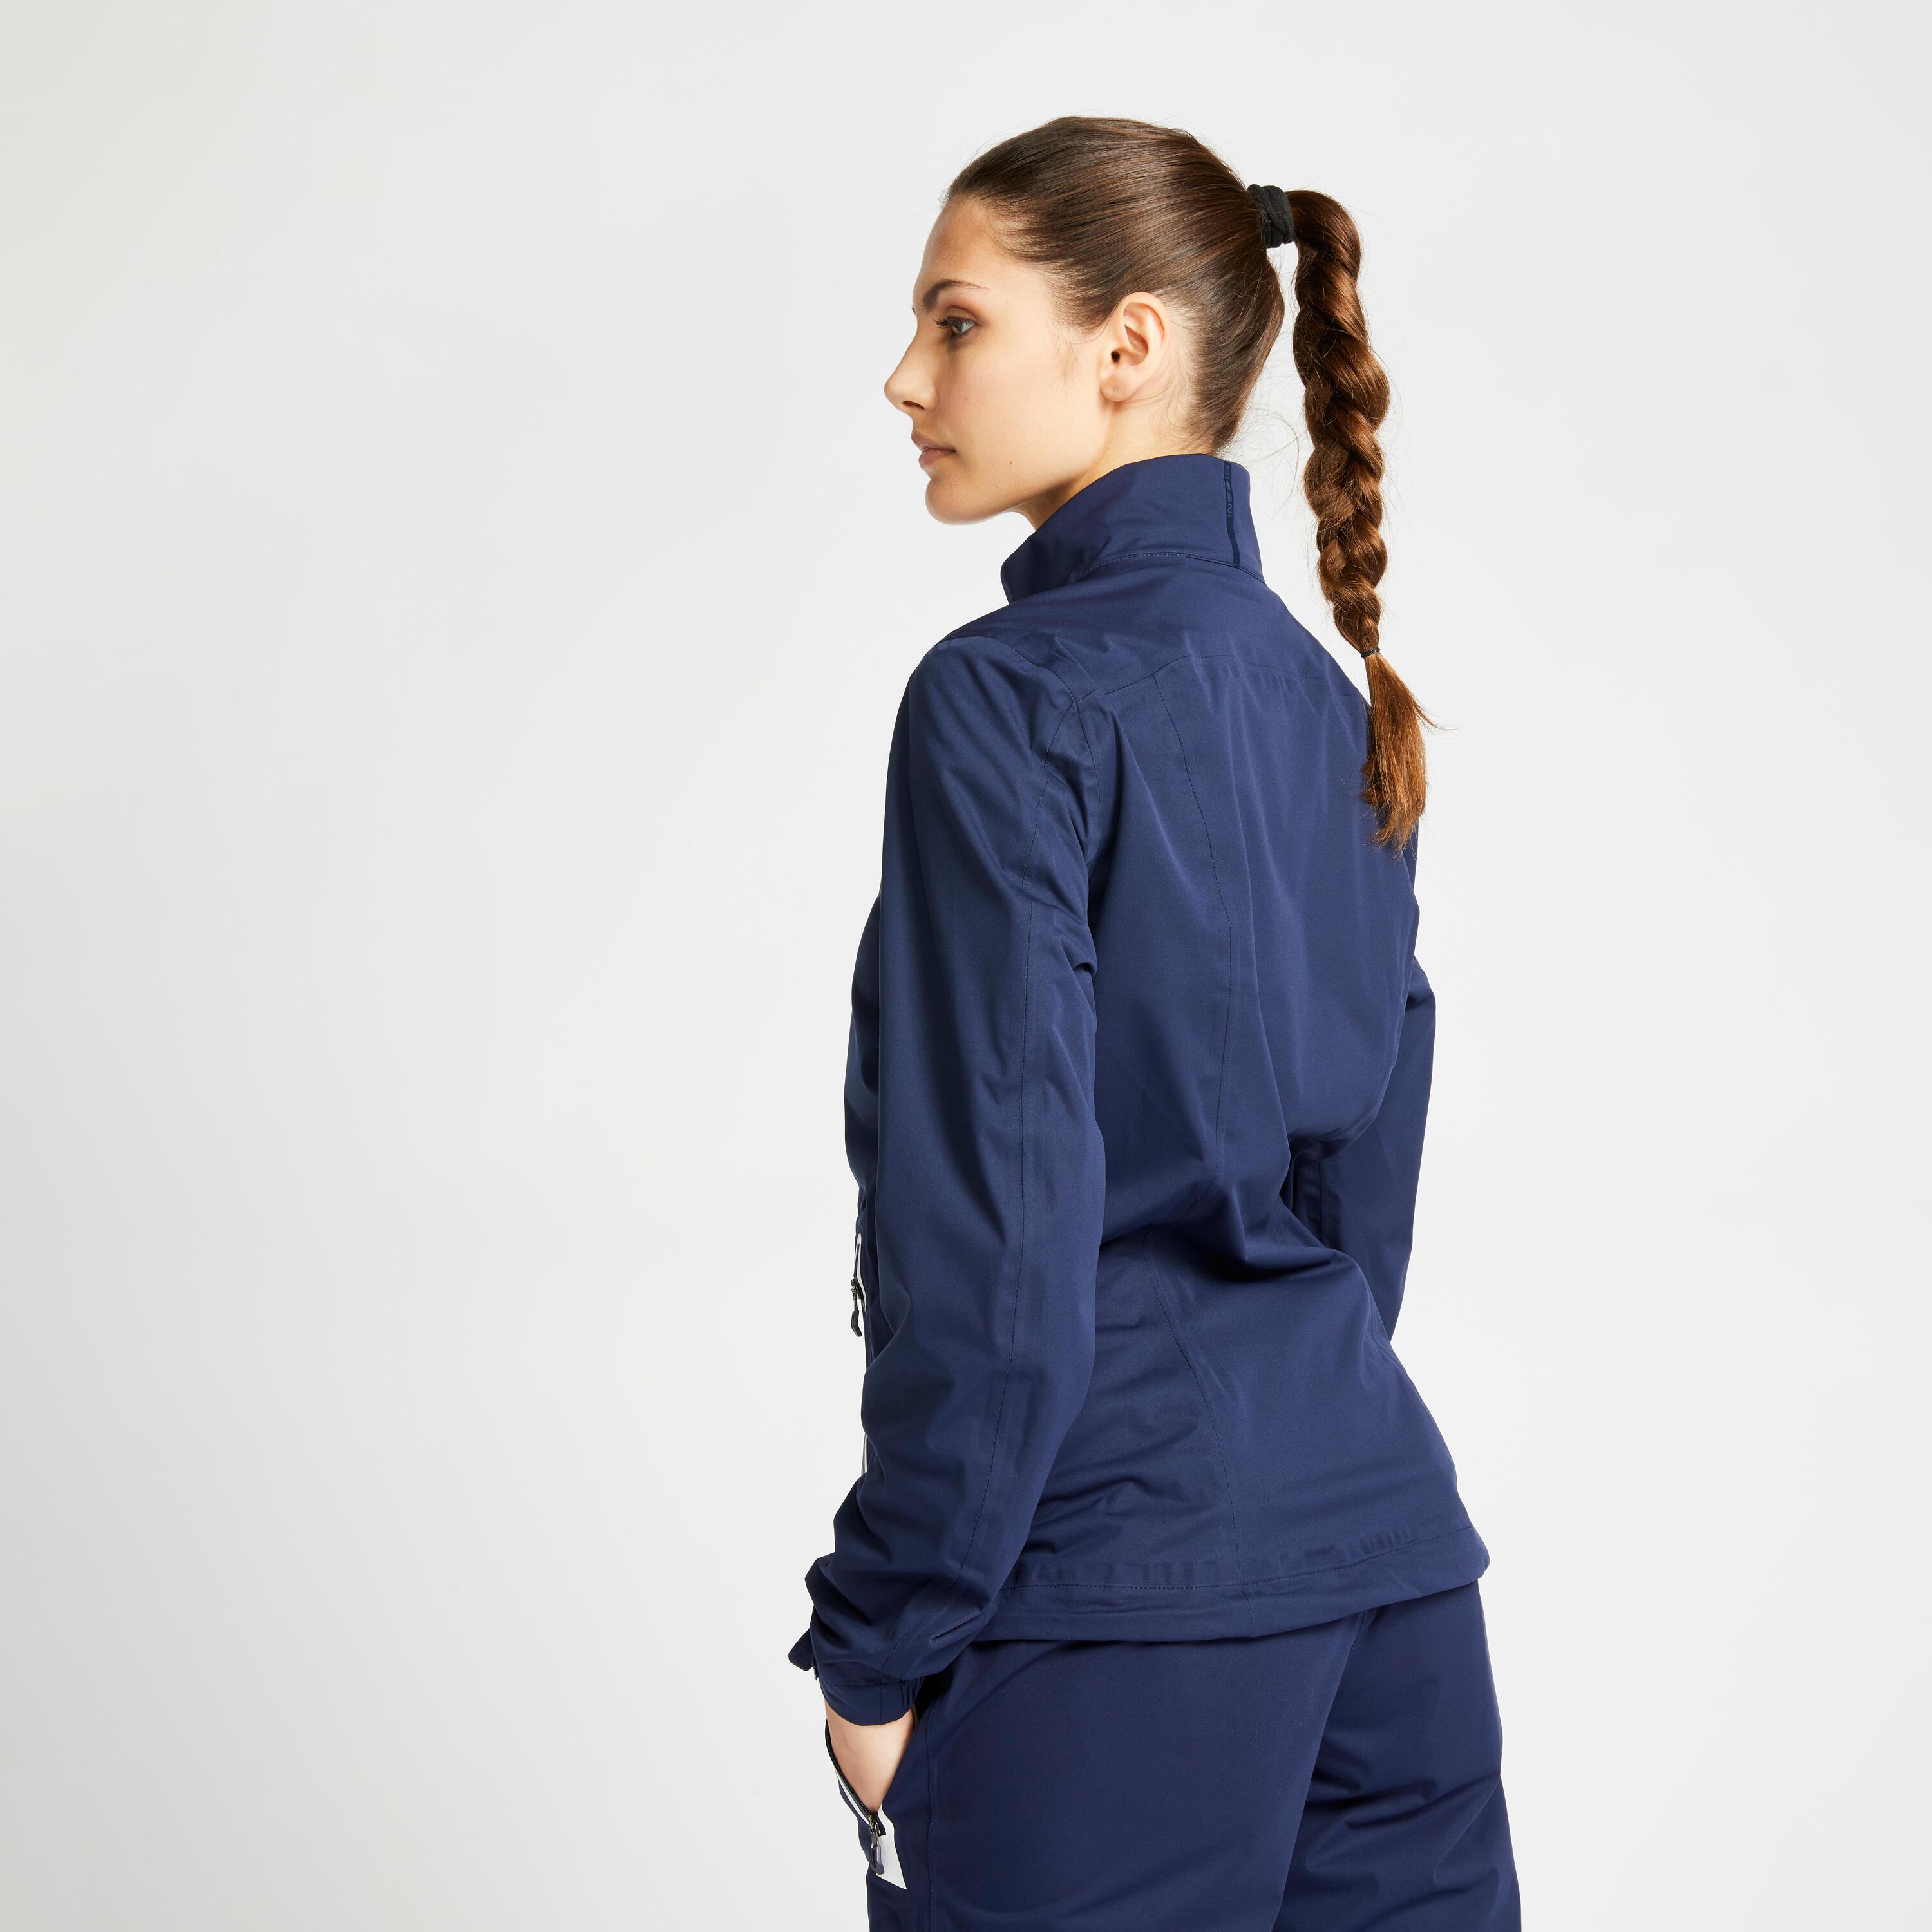 Women's golf waterproof rain jacket - RW500 navy blue 2/7